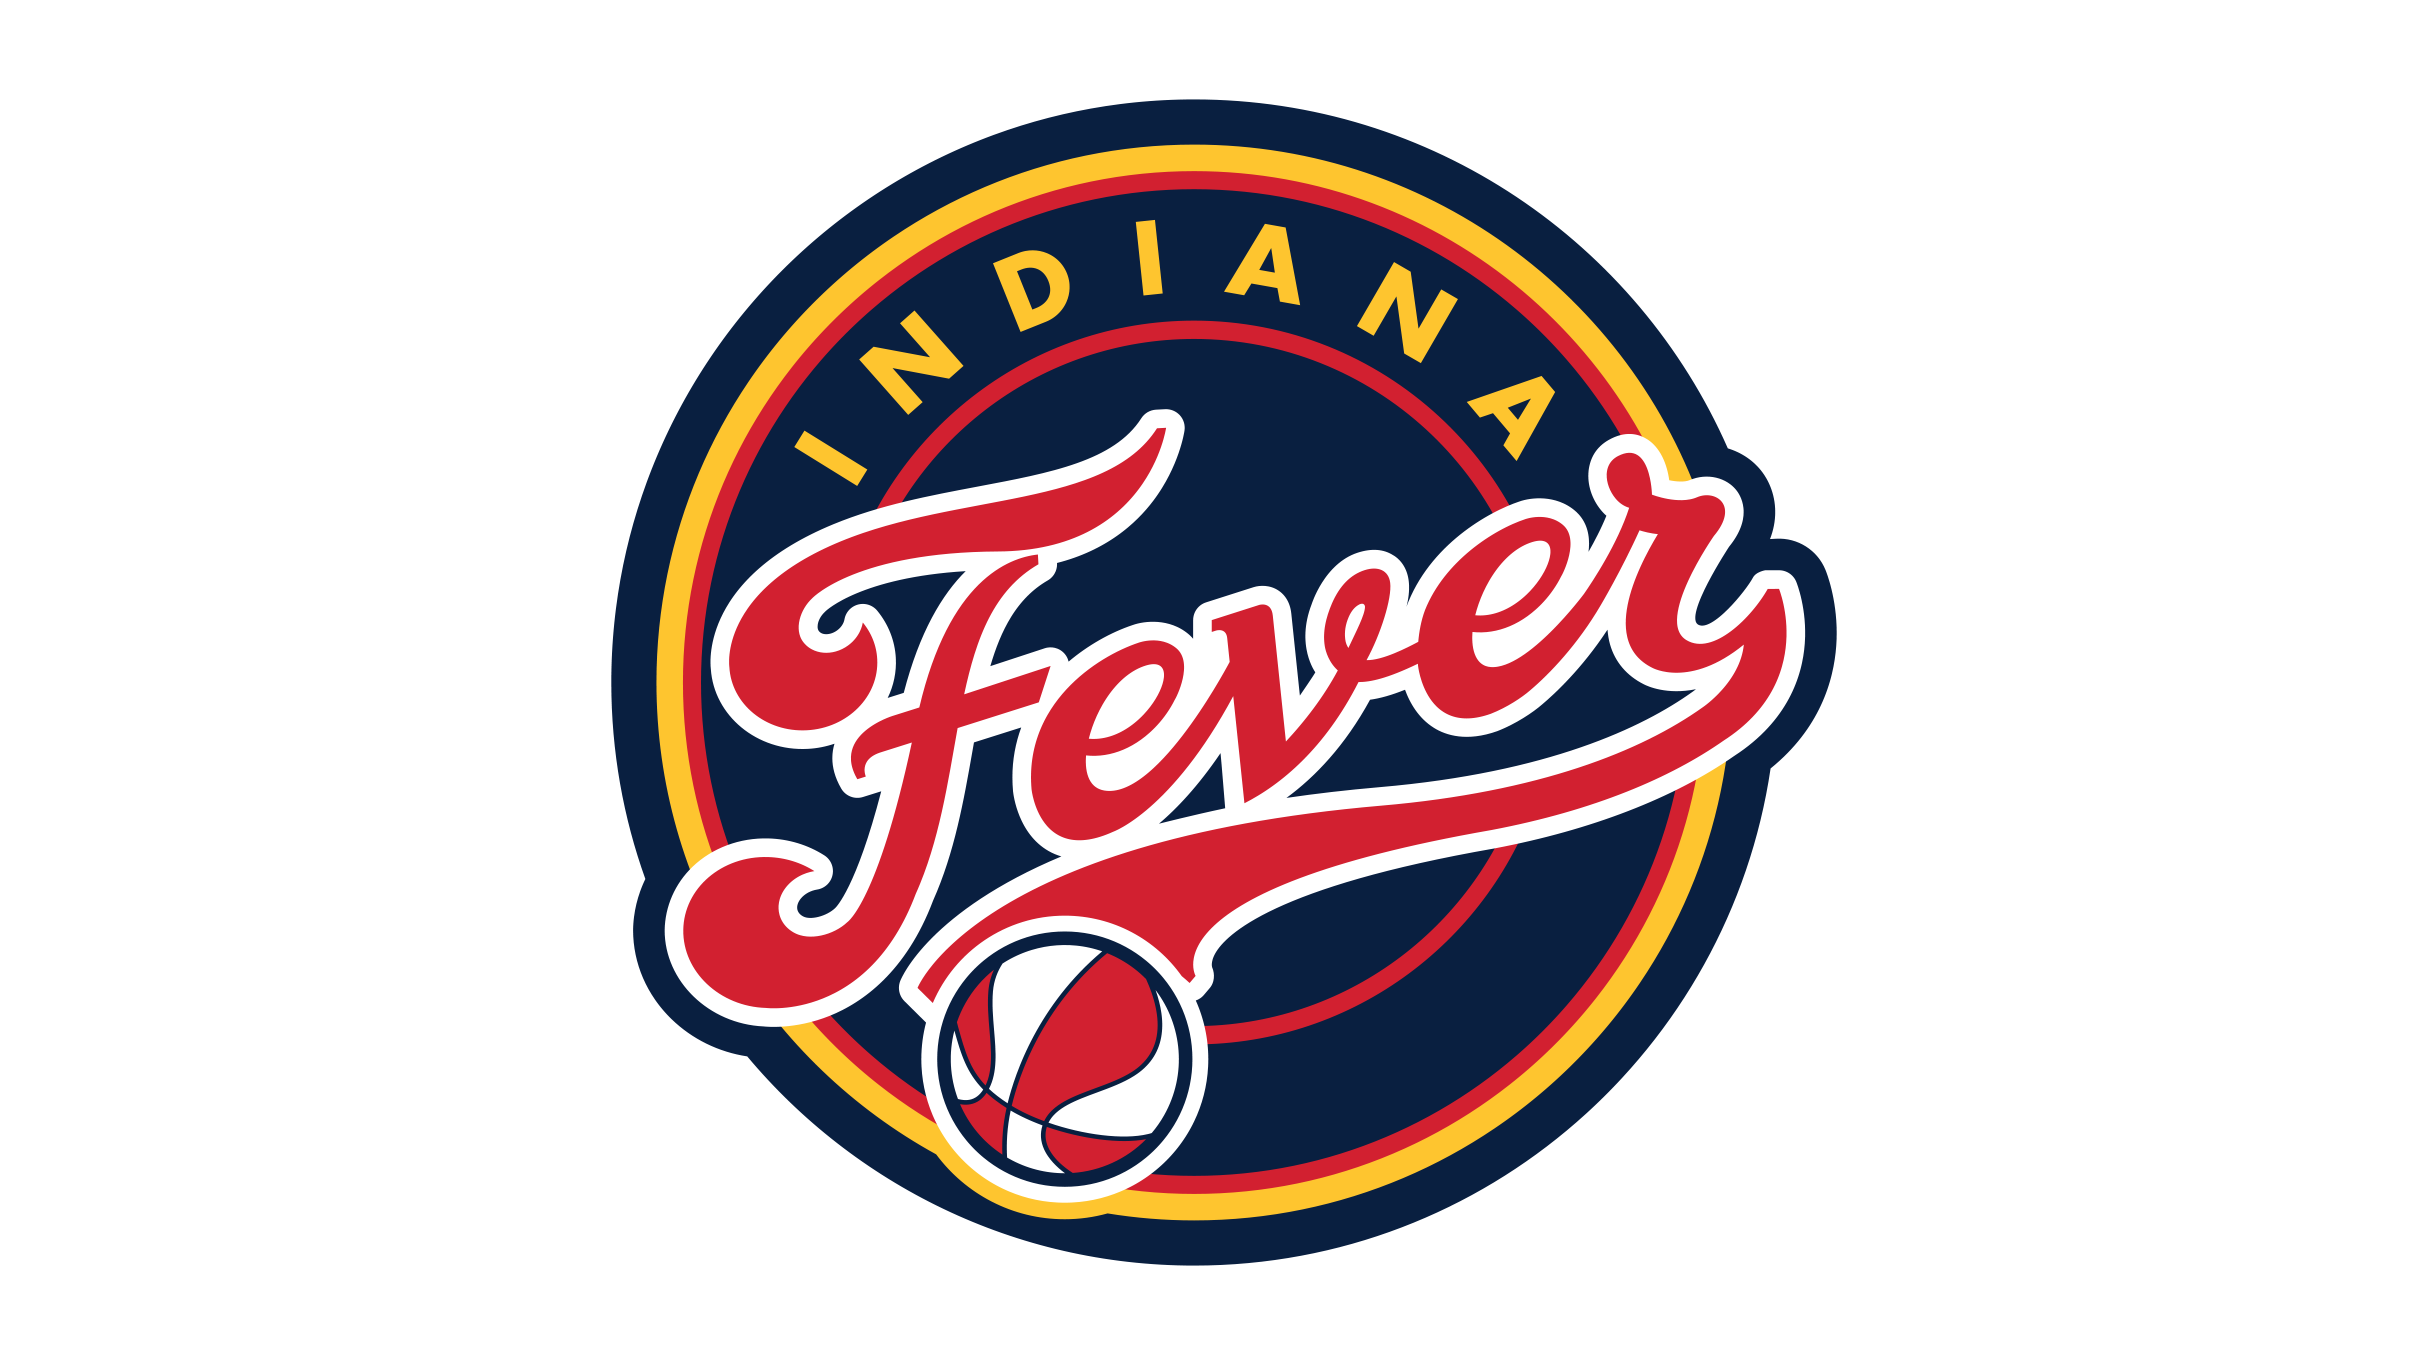 Indiana Fever vs. Washington Mystics presales in Indianapolis